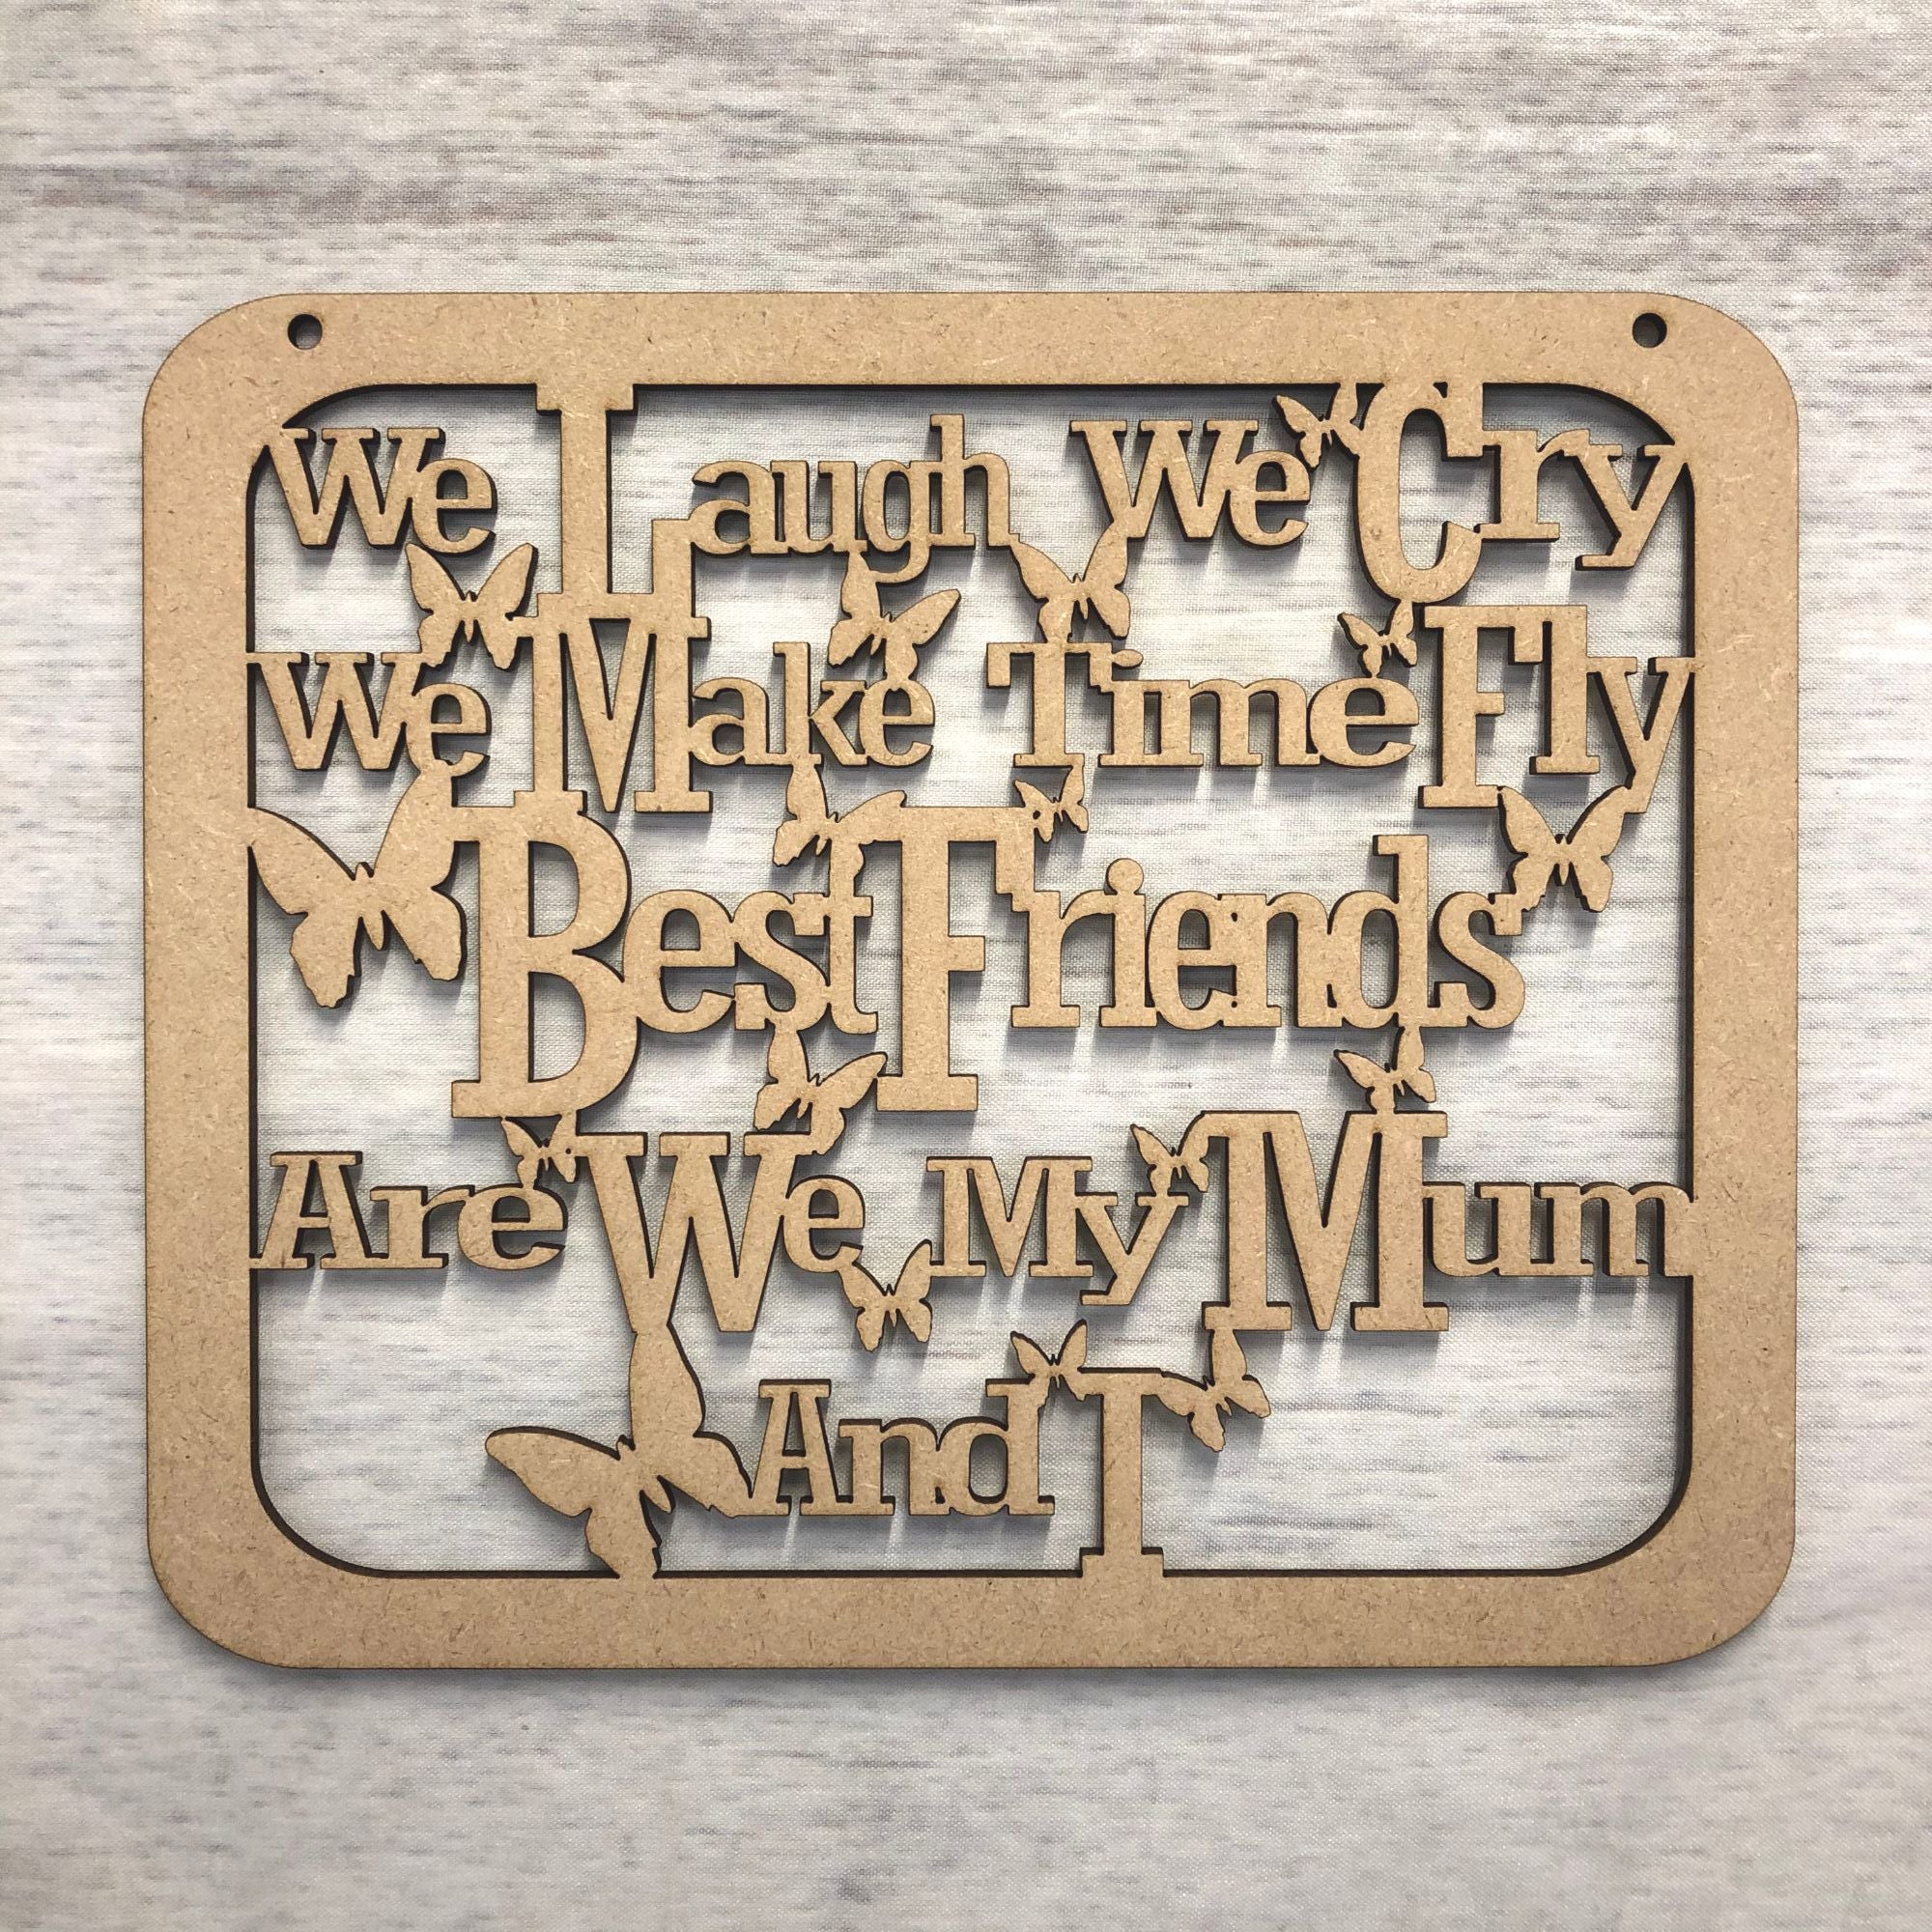 Mum, Best Friends, hanging plaque.